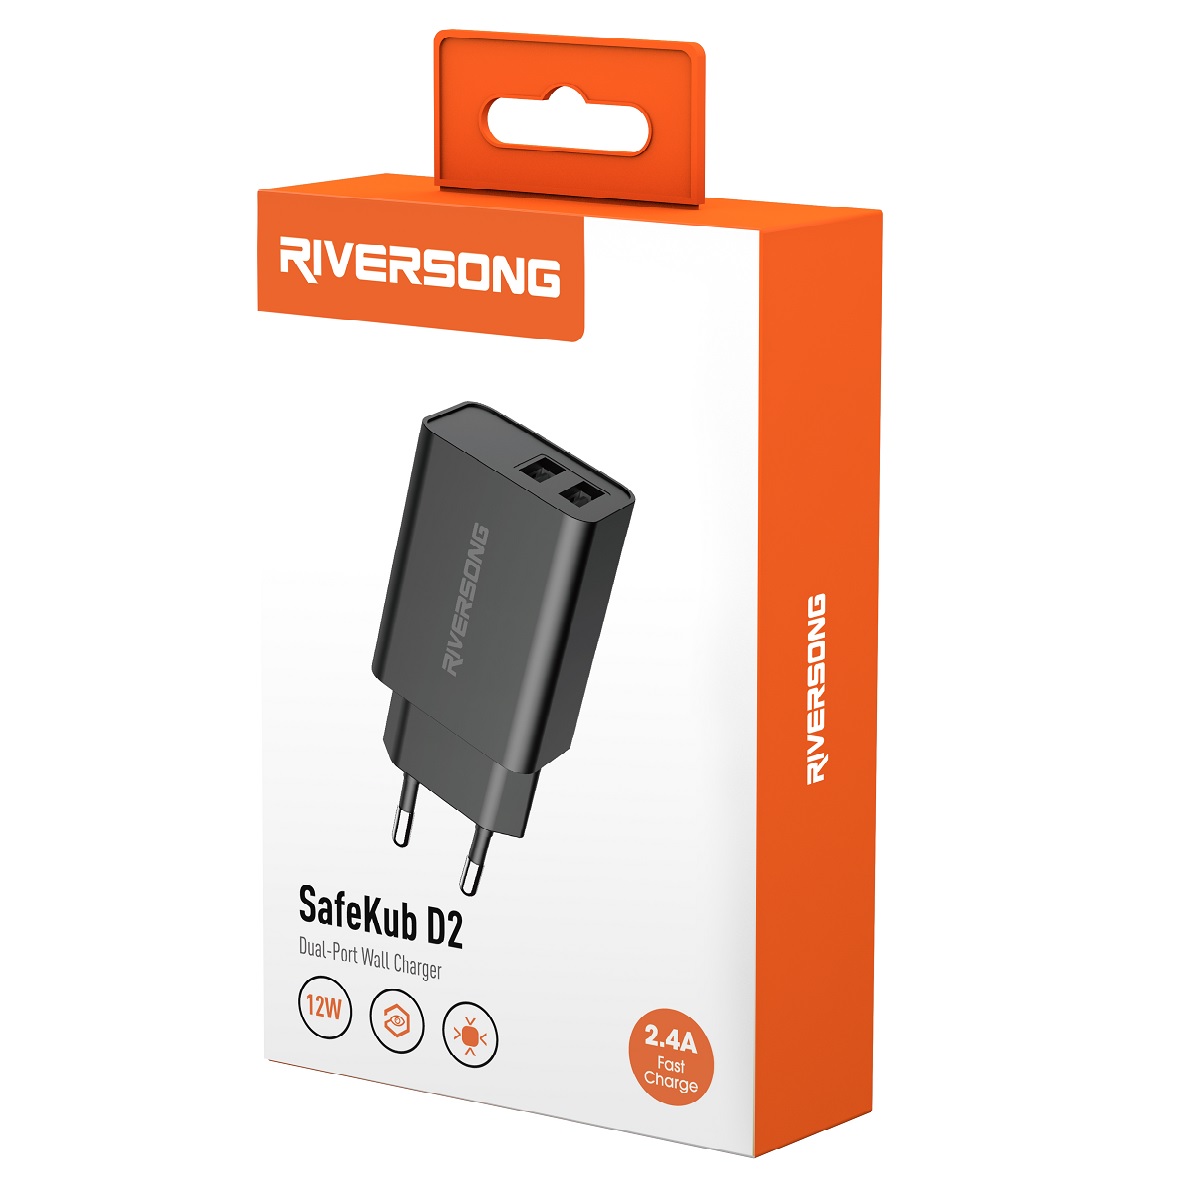 Riversong adowarka sieciowa SafeKub D2 2x USB 12W czarna AD29 / 4